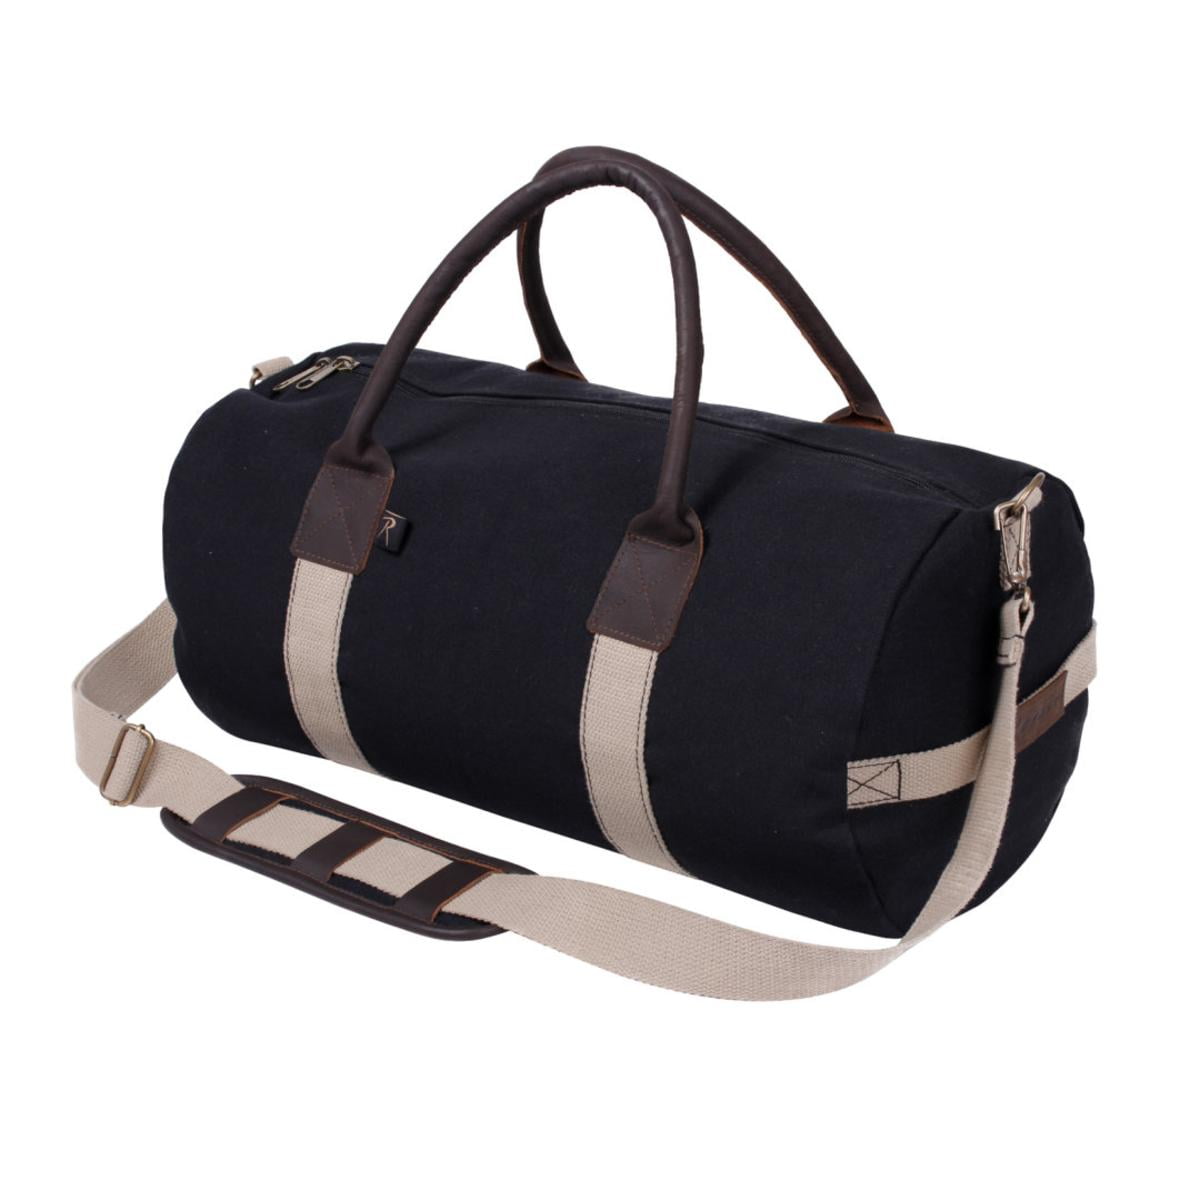 Duffle Duffel Travel Luggage School Gym Camp Dance Carry On Tote Bag 19 Inch 